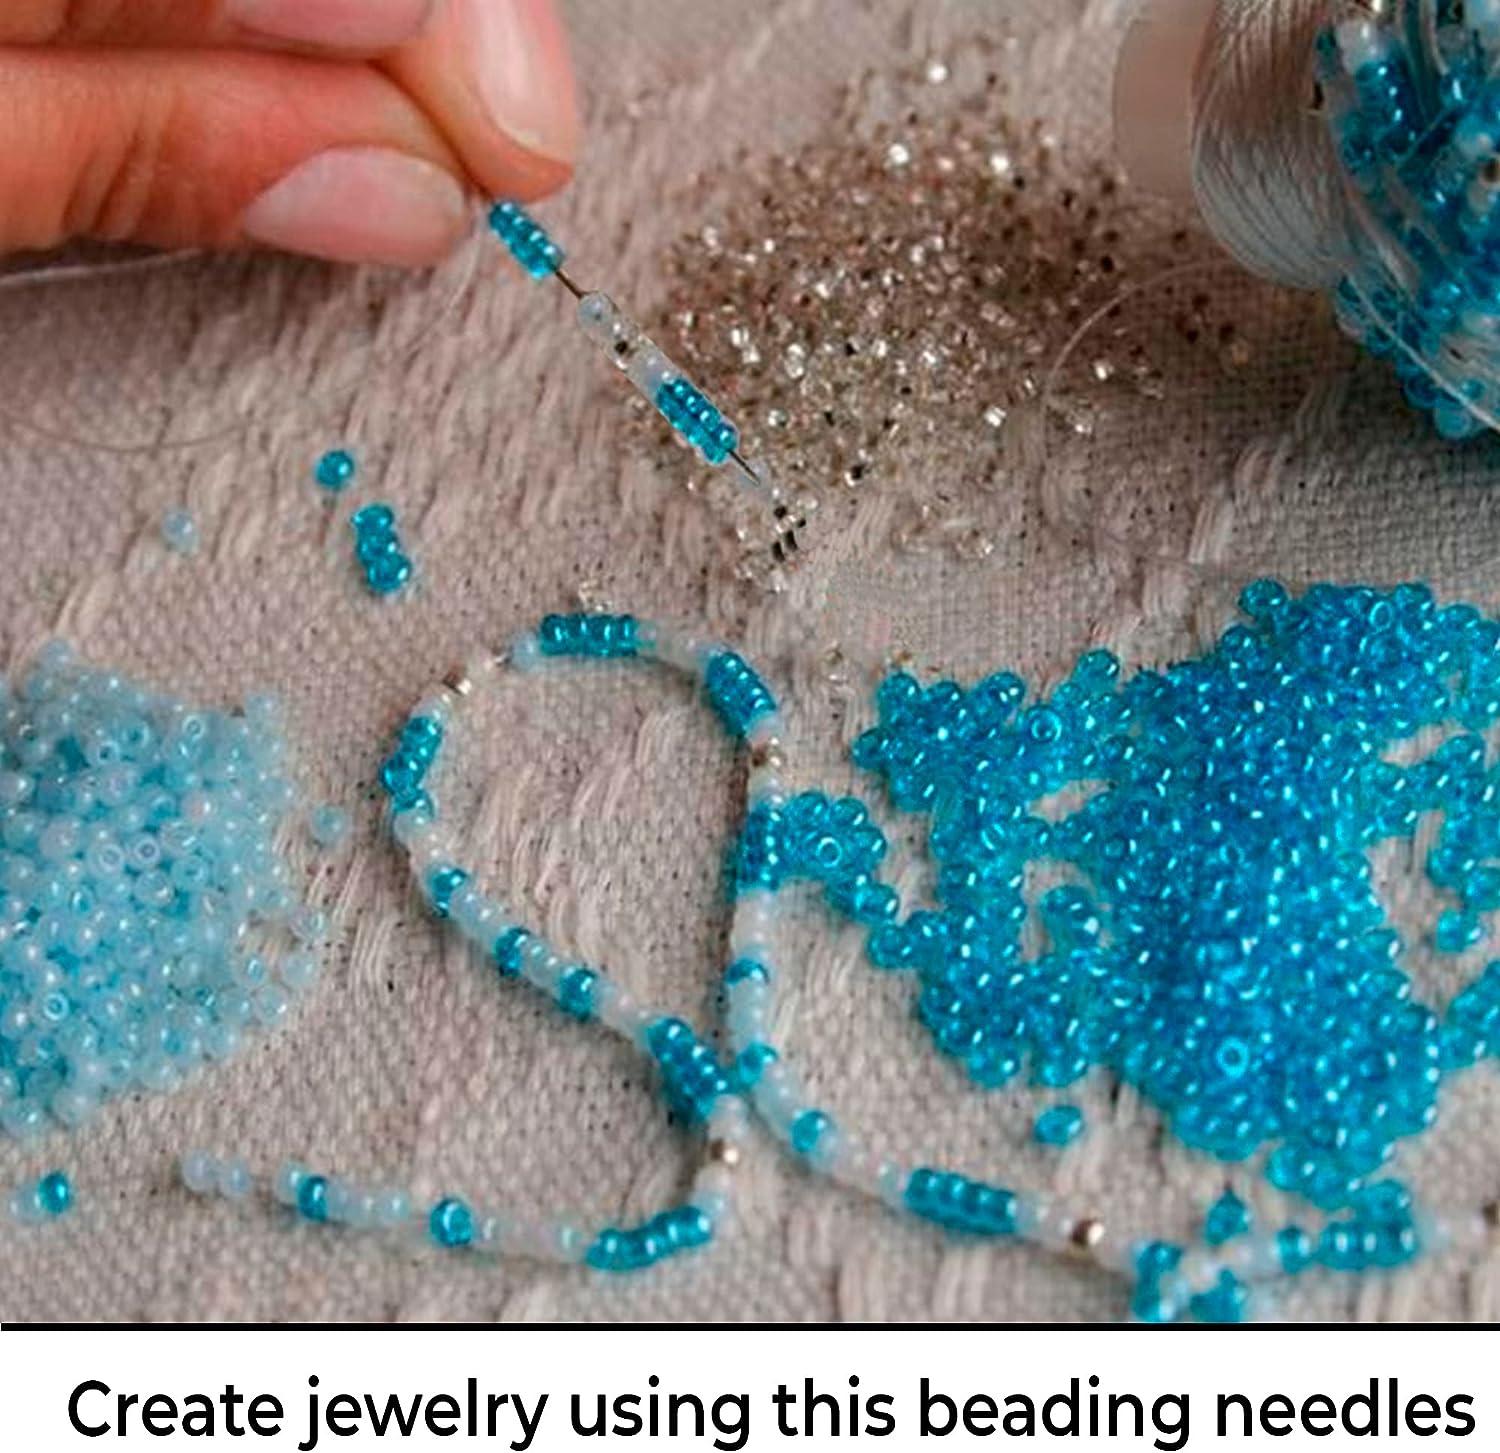 JHNBY 30PCS Stainless Steel Beading Needles for beads Threading